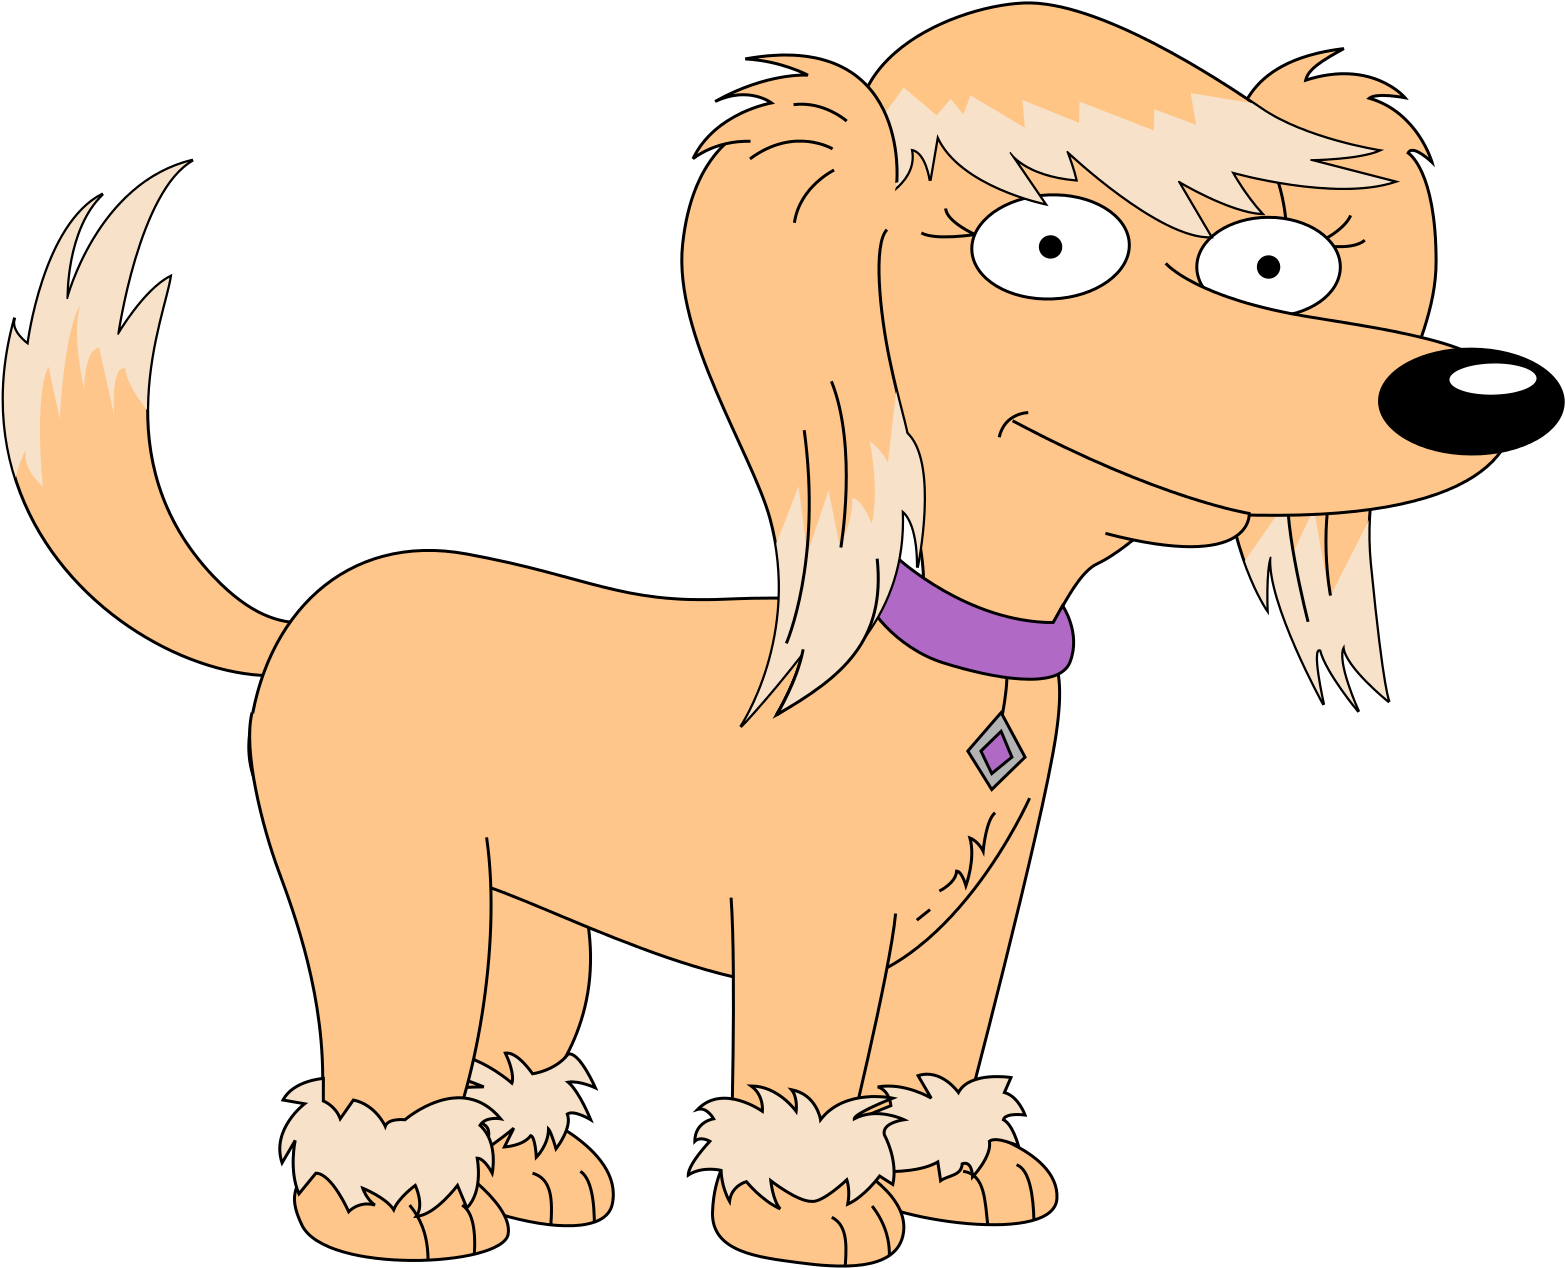 Family Guy Cartoon Dog PNG image